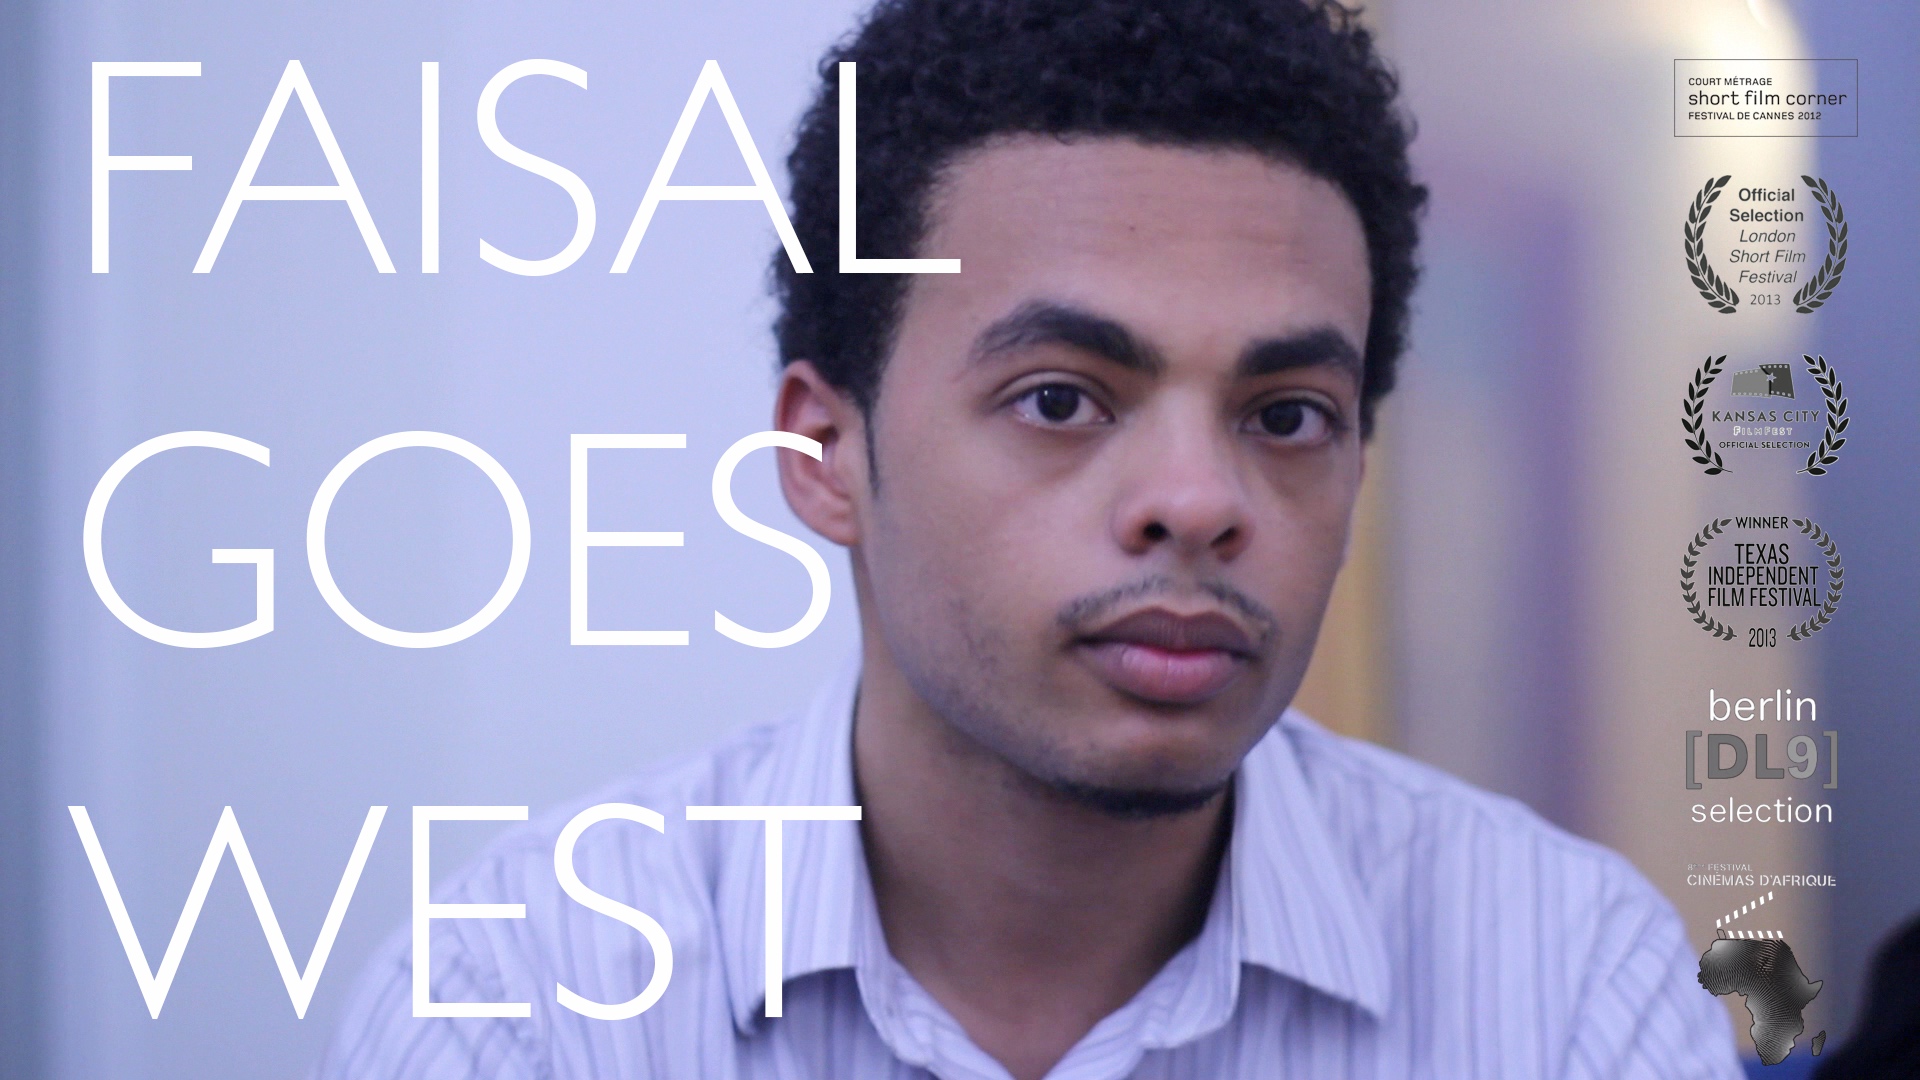 Faisal Goes West - YouTube cover.jpg